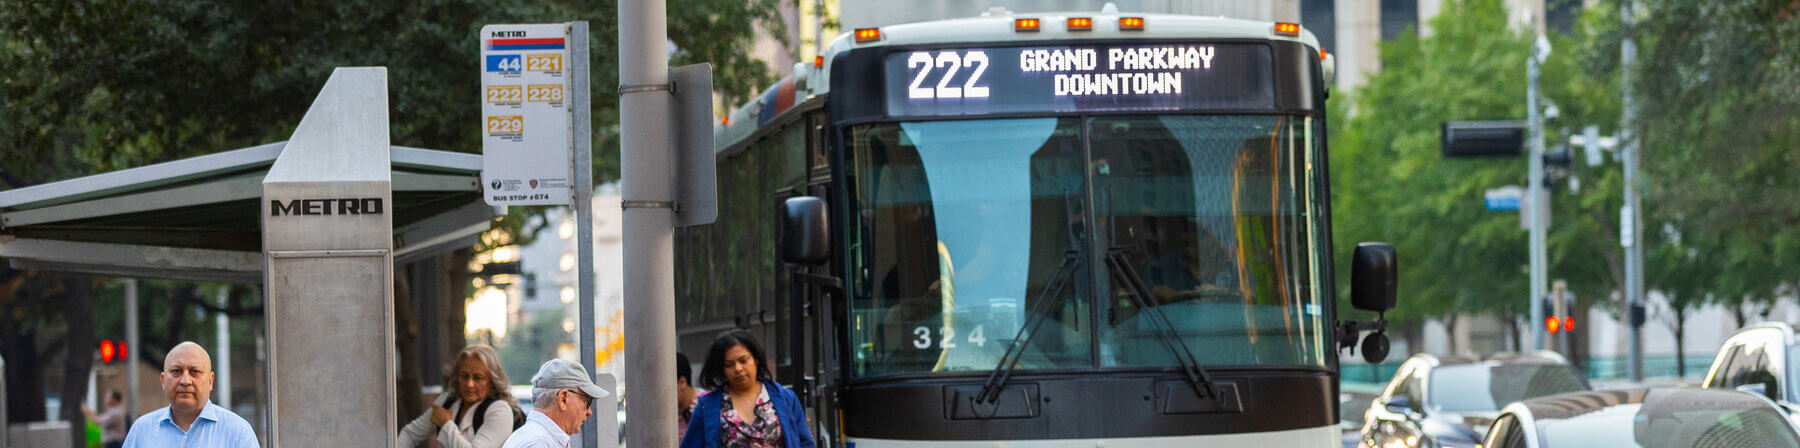 222 Grand Parkway Park & Ride bus